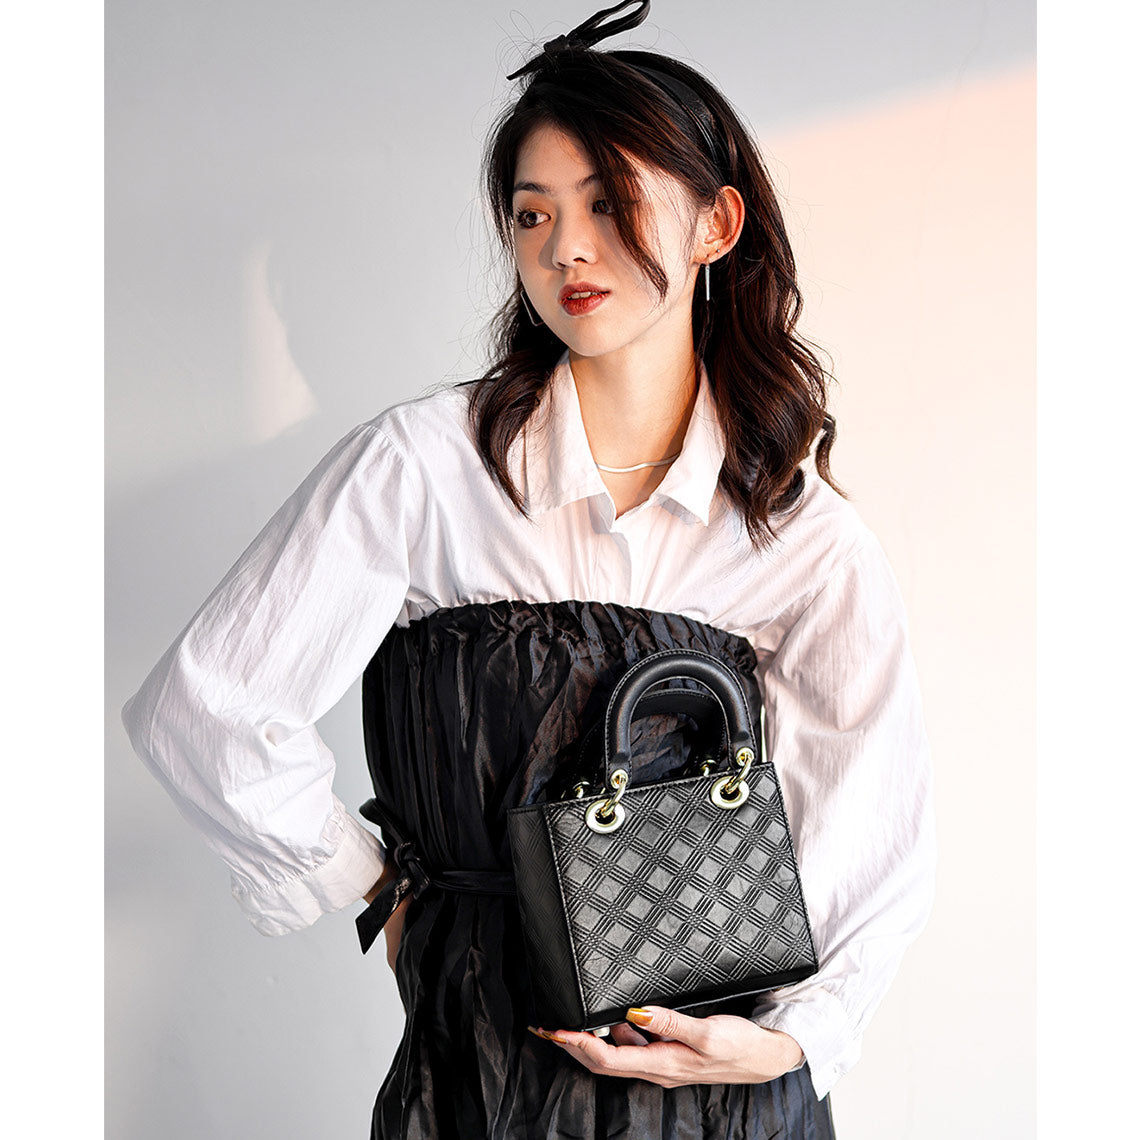 Calfskin Leather Handbag Black | Women Leather Crossbody Bag Purse - POPSEWING™